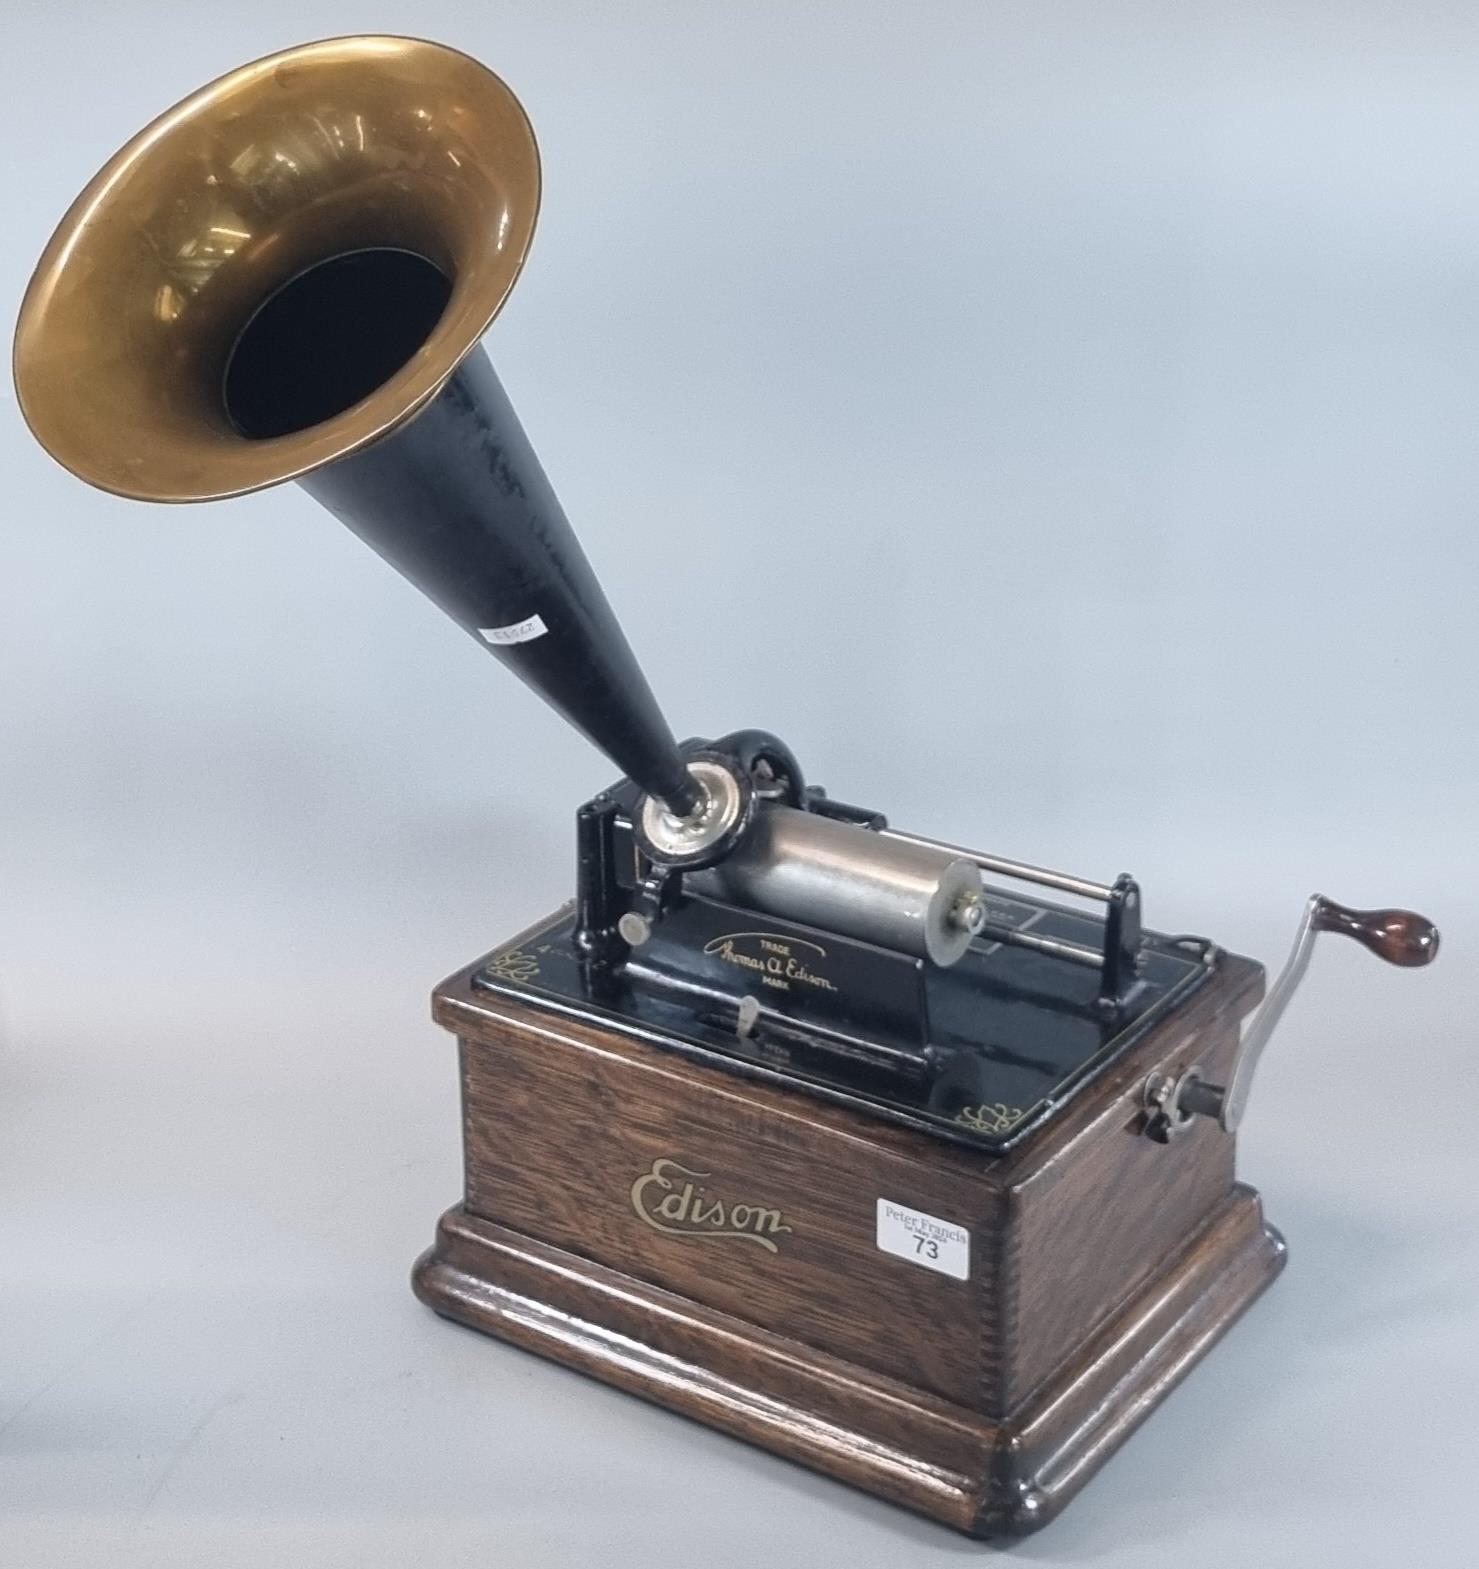 Vintage Edison Fireside phonograph serial number 26610, with horn. Cased. (B.P. 21% + VAT)